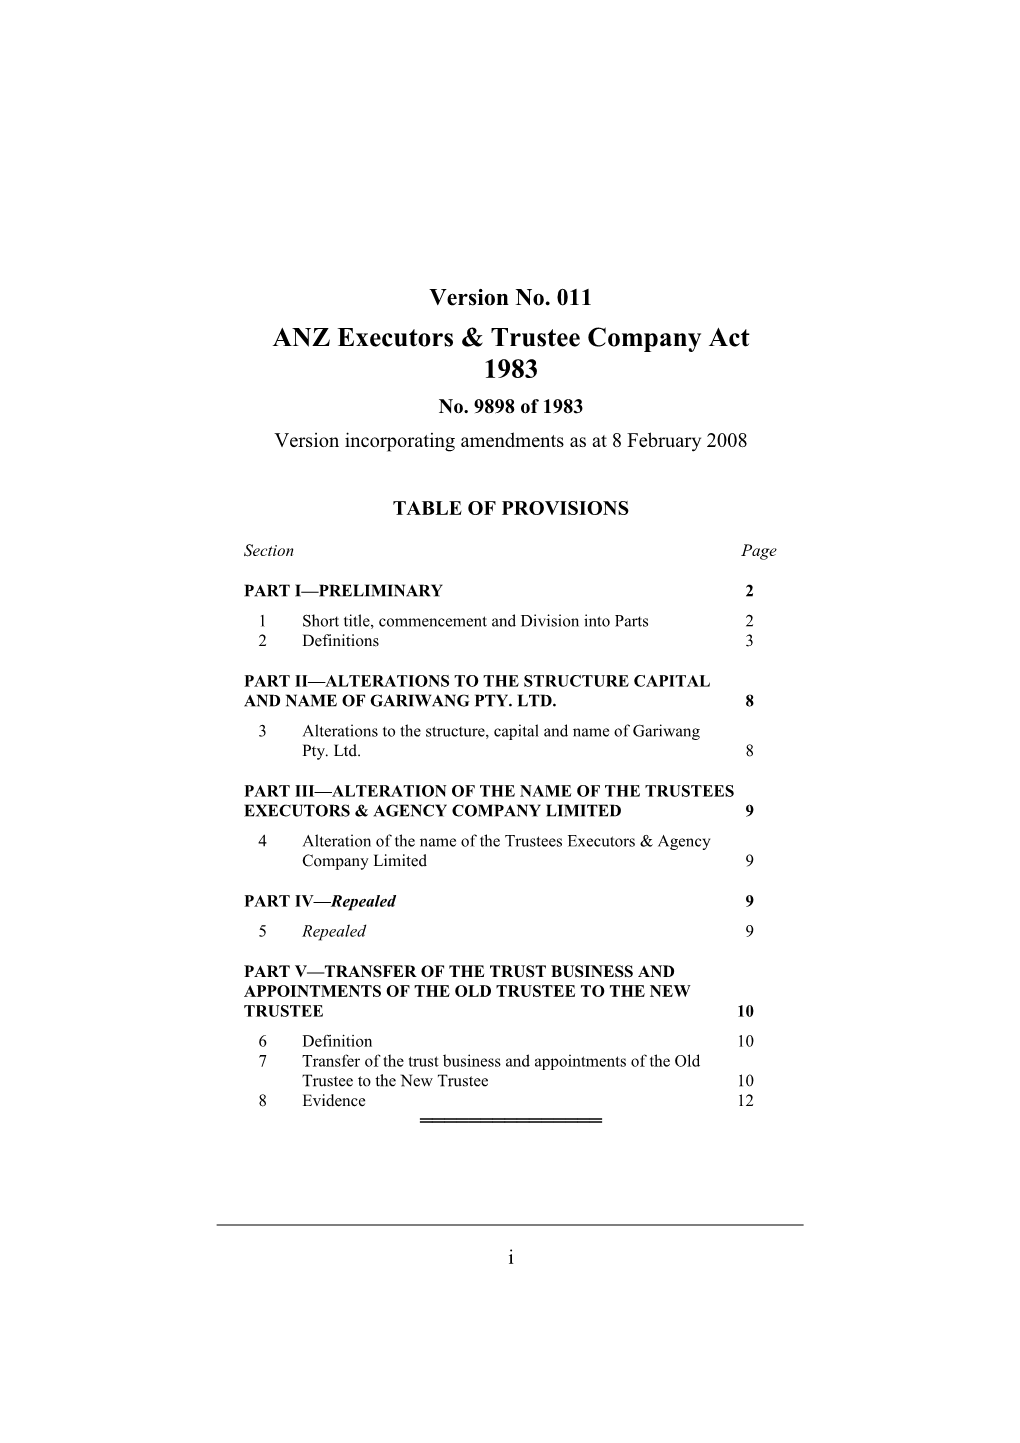 ANZ Executors & Trustee Company Act 1983